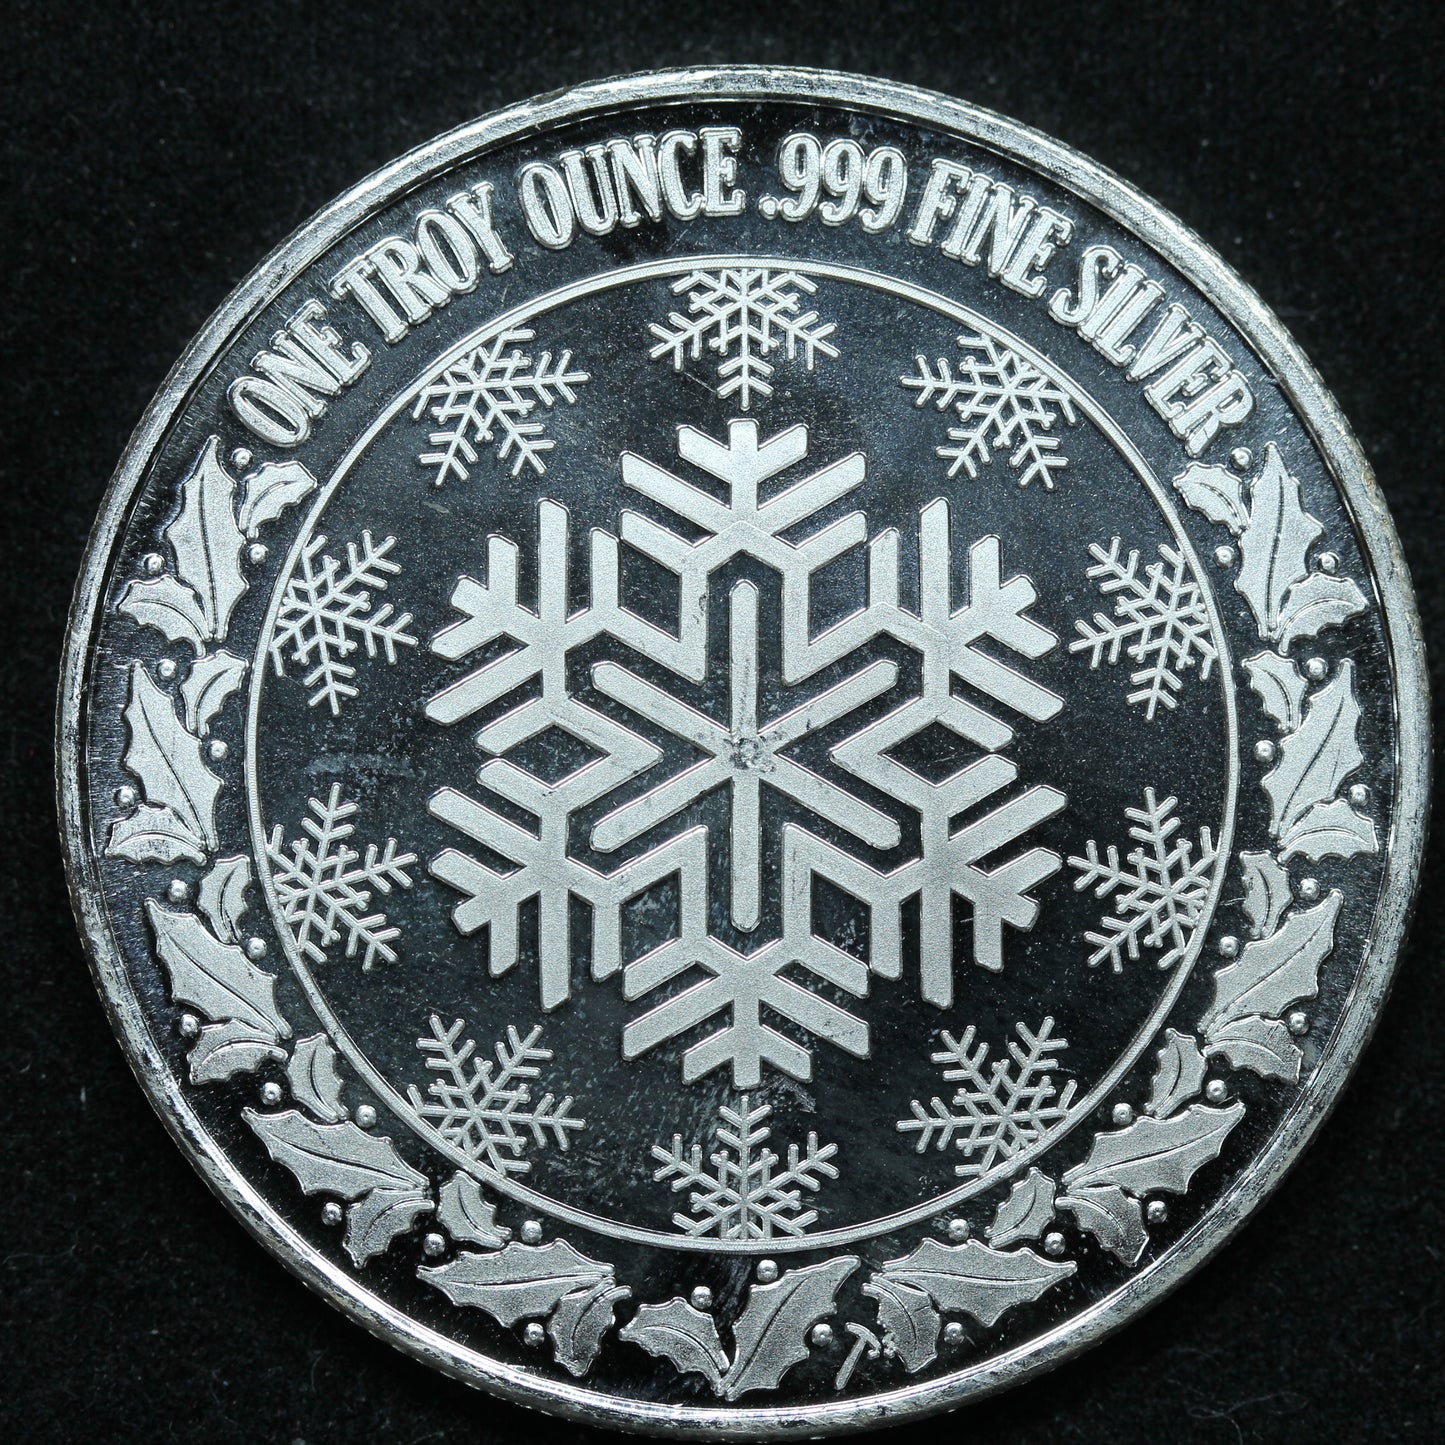 1 oz .999 Fine Silver - Happy Holidays Train Snowflakes Art Round w/ Capsule